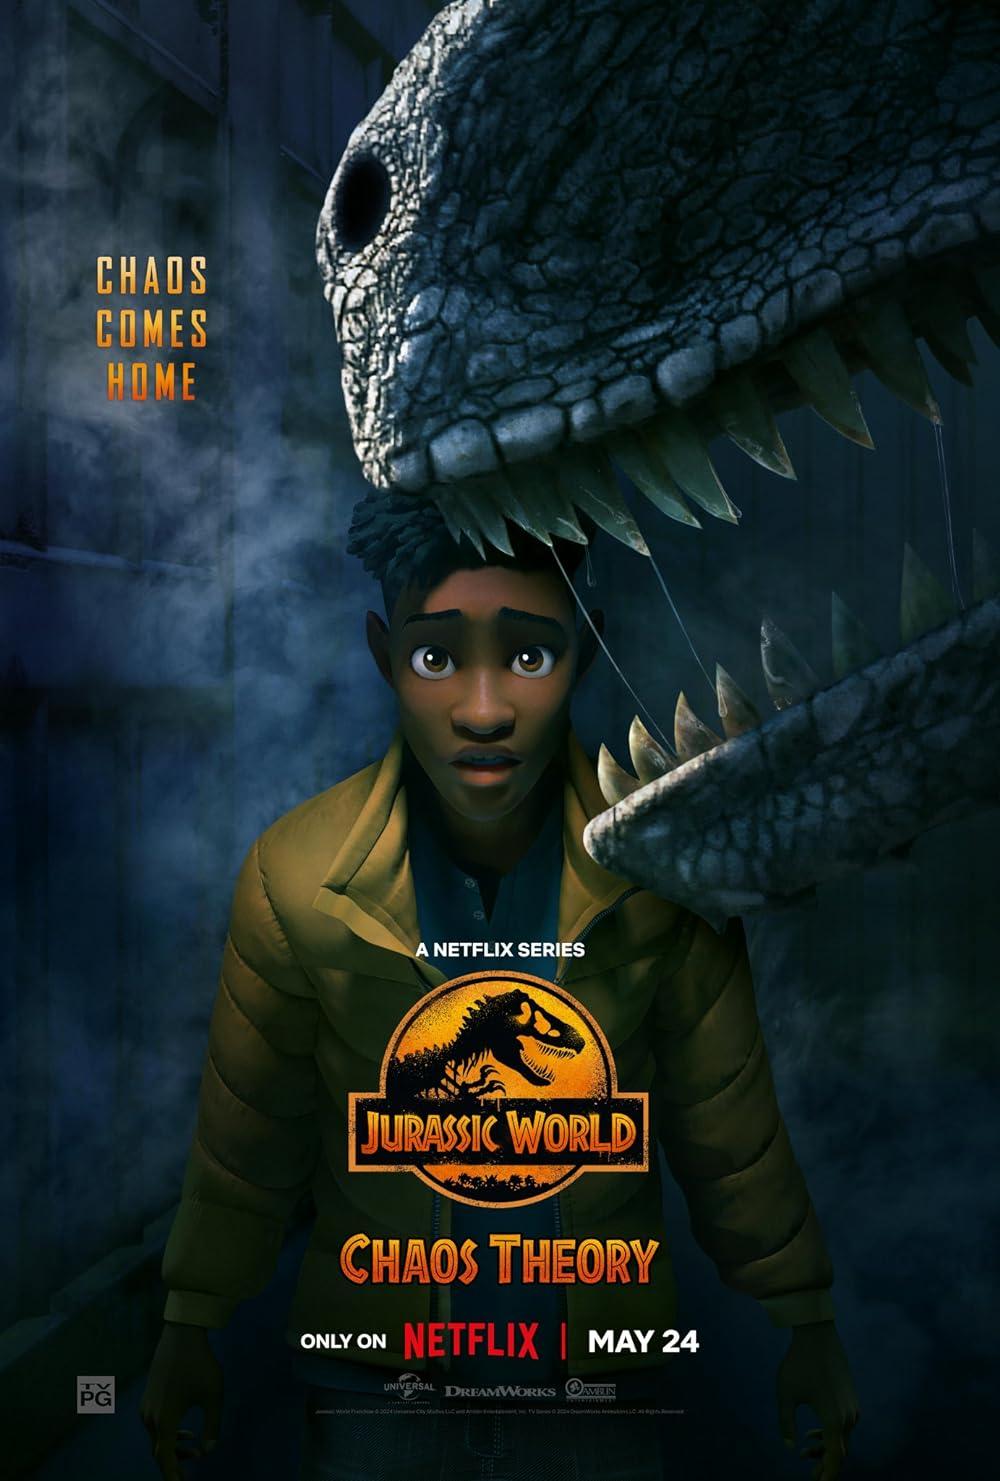 Jurassic World: Chaos Theory (Netflix) – May 24Jurassic World: Chaos Theory, an animated series, continues the story from 